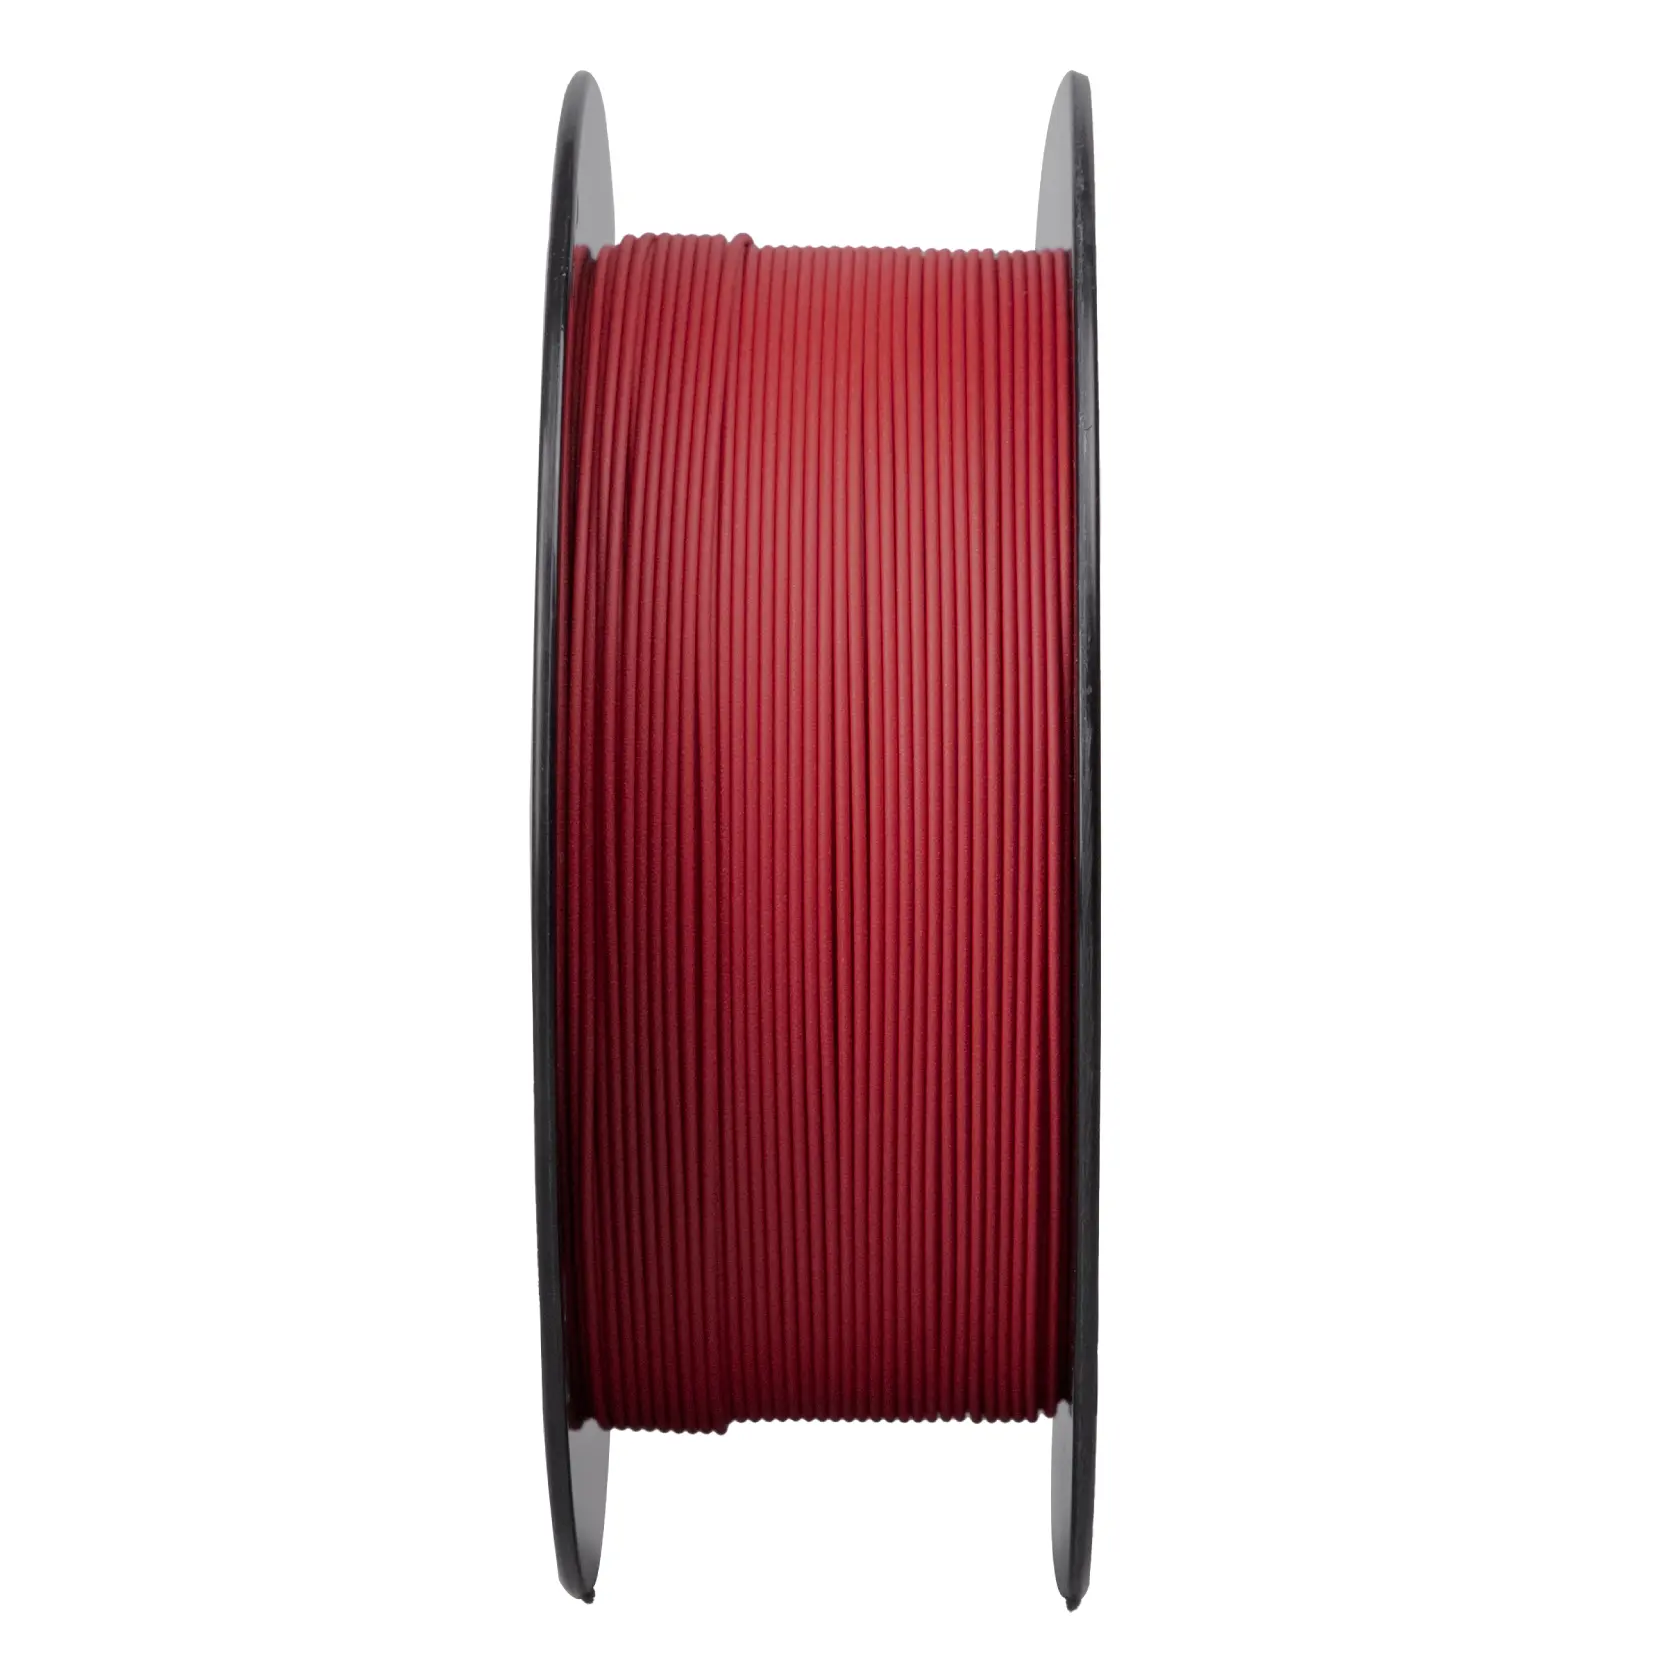 Kexcelled Filament OEM/ODM gute Druckqualität 1,75 mm Pla-Druckerfilament Chelsea Rot